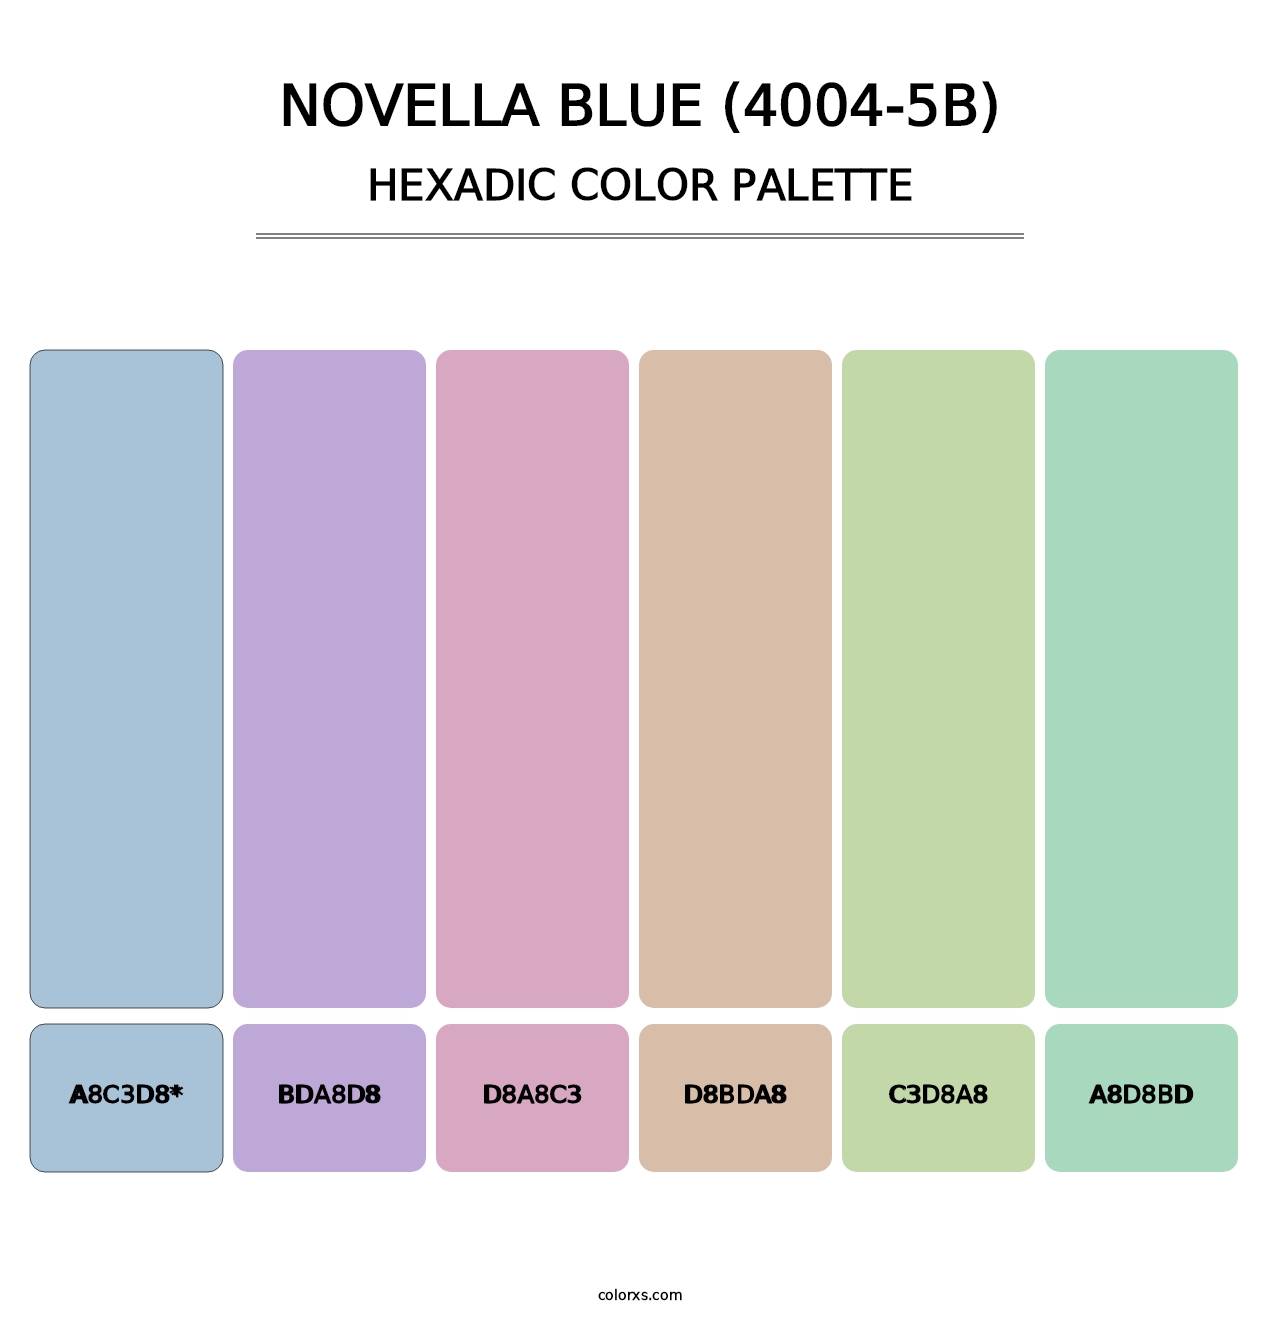 Novella Blue (4004-5B) - Hexadic Color Palette